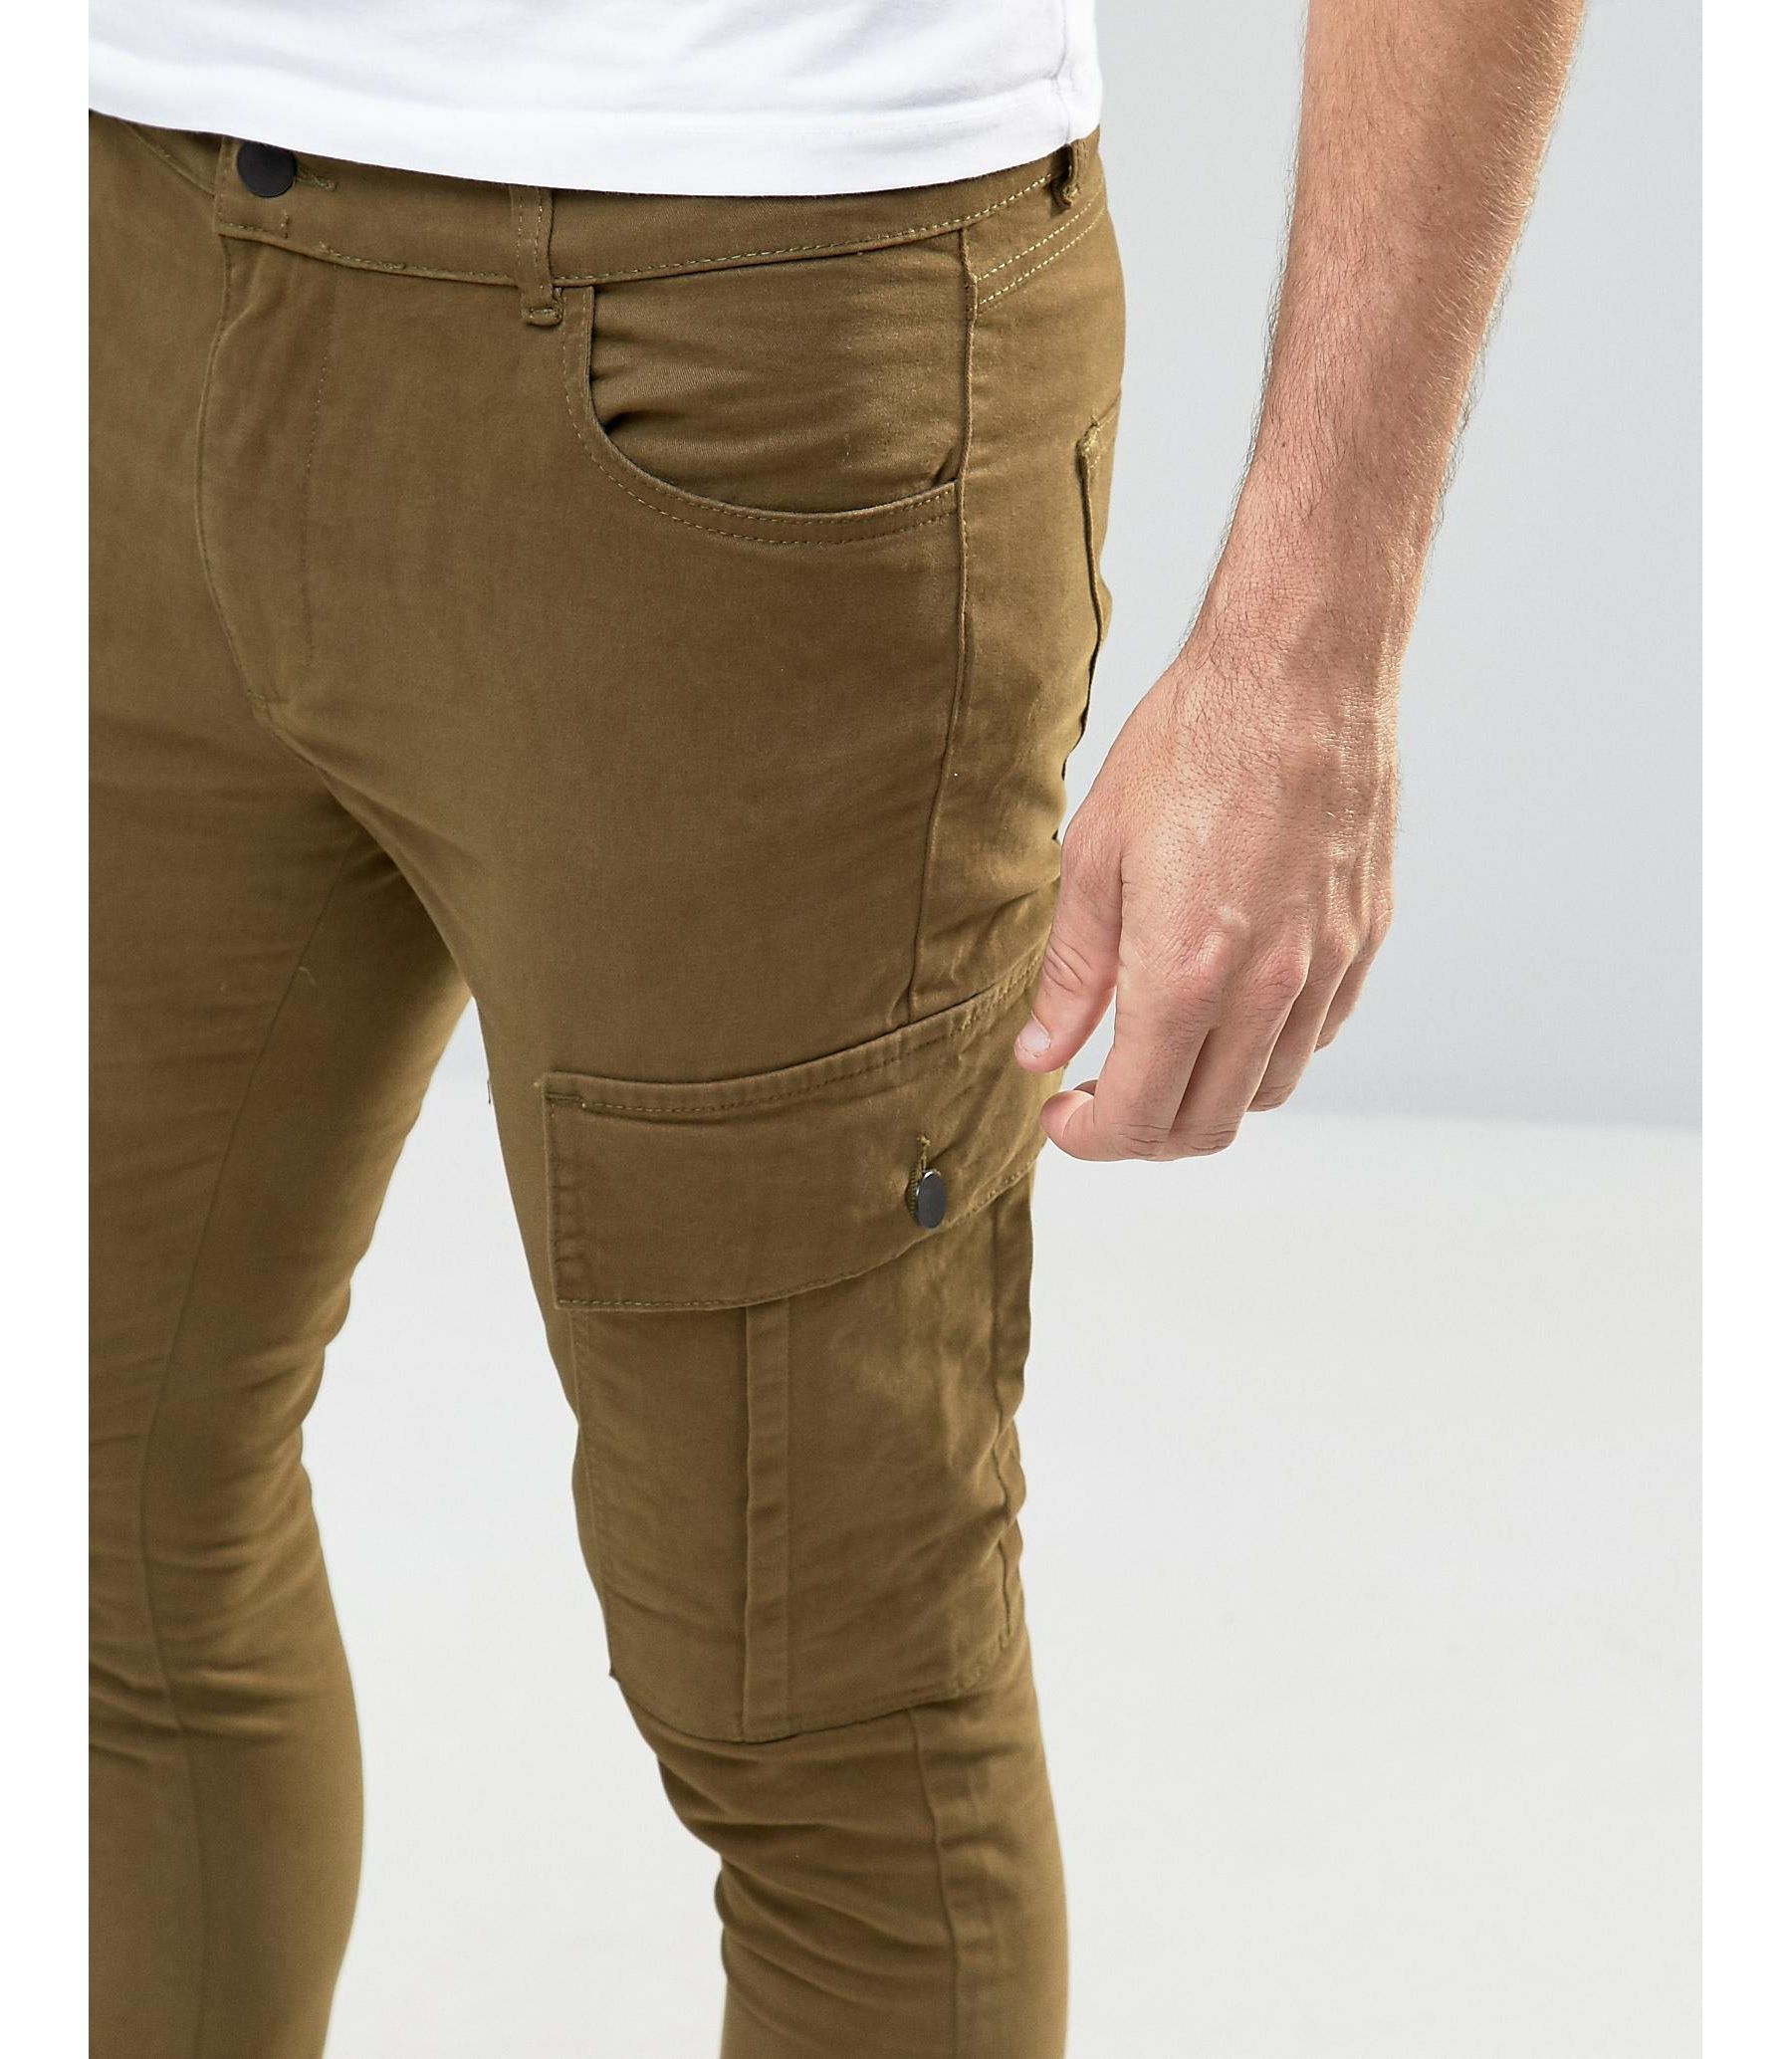 Lyst - Asos Super Skinny Cargo Pants In Khaki in Green for Men